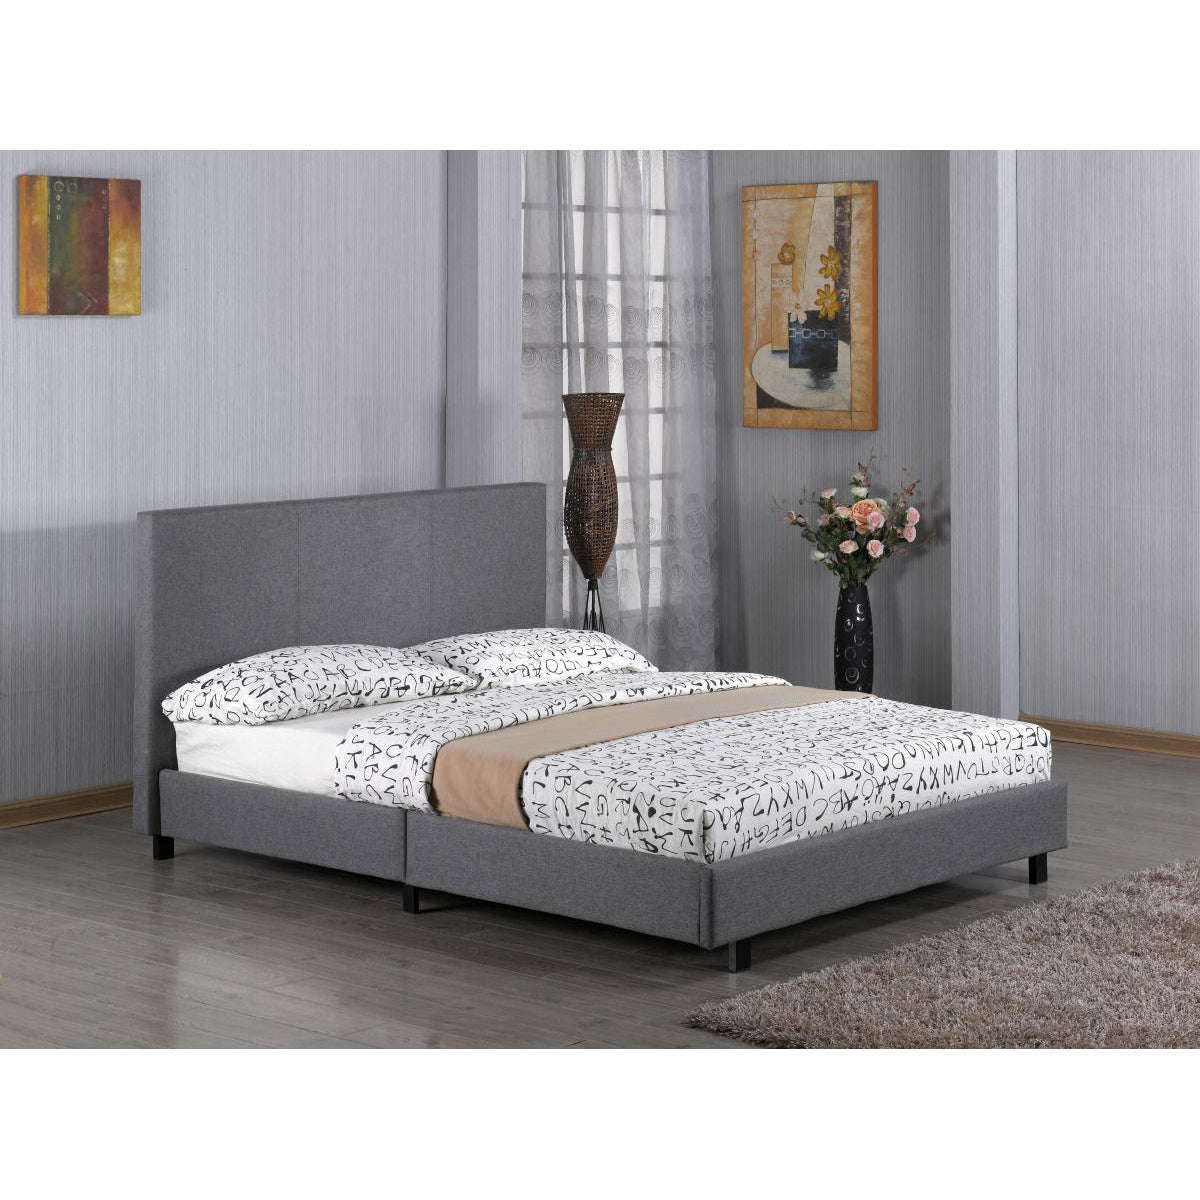 Ashpinoke:Fusion Fabric Single Bed Grey,Single Beds,Heartlands Furniture